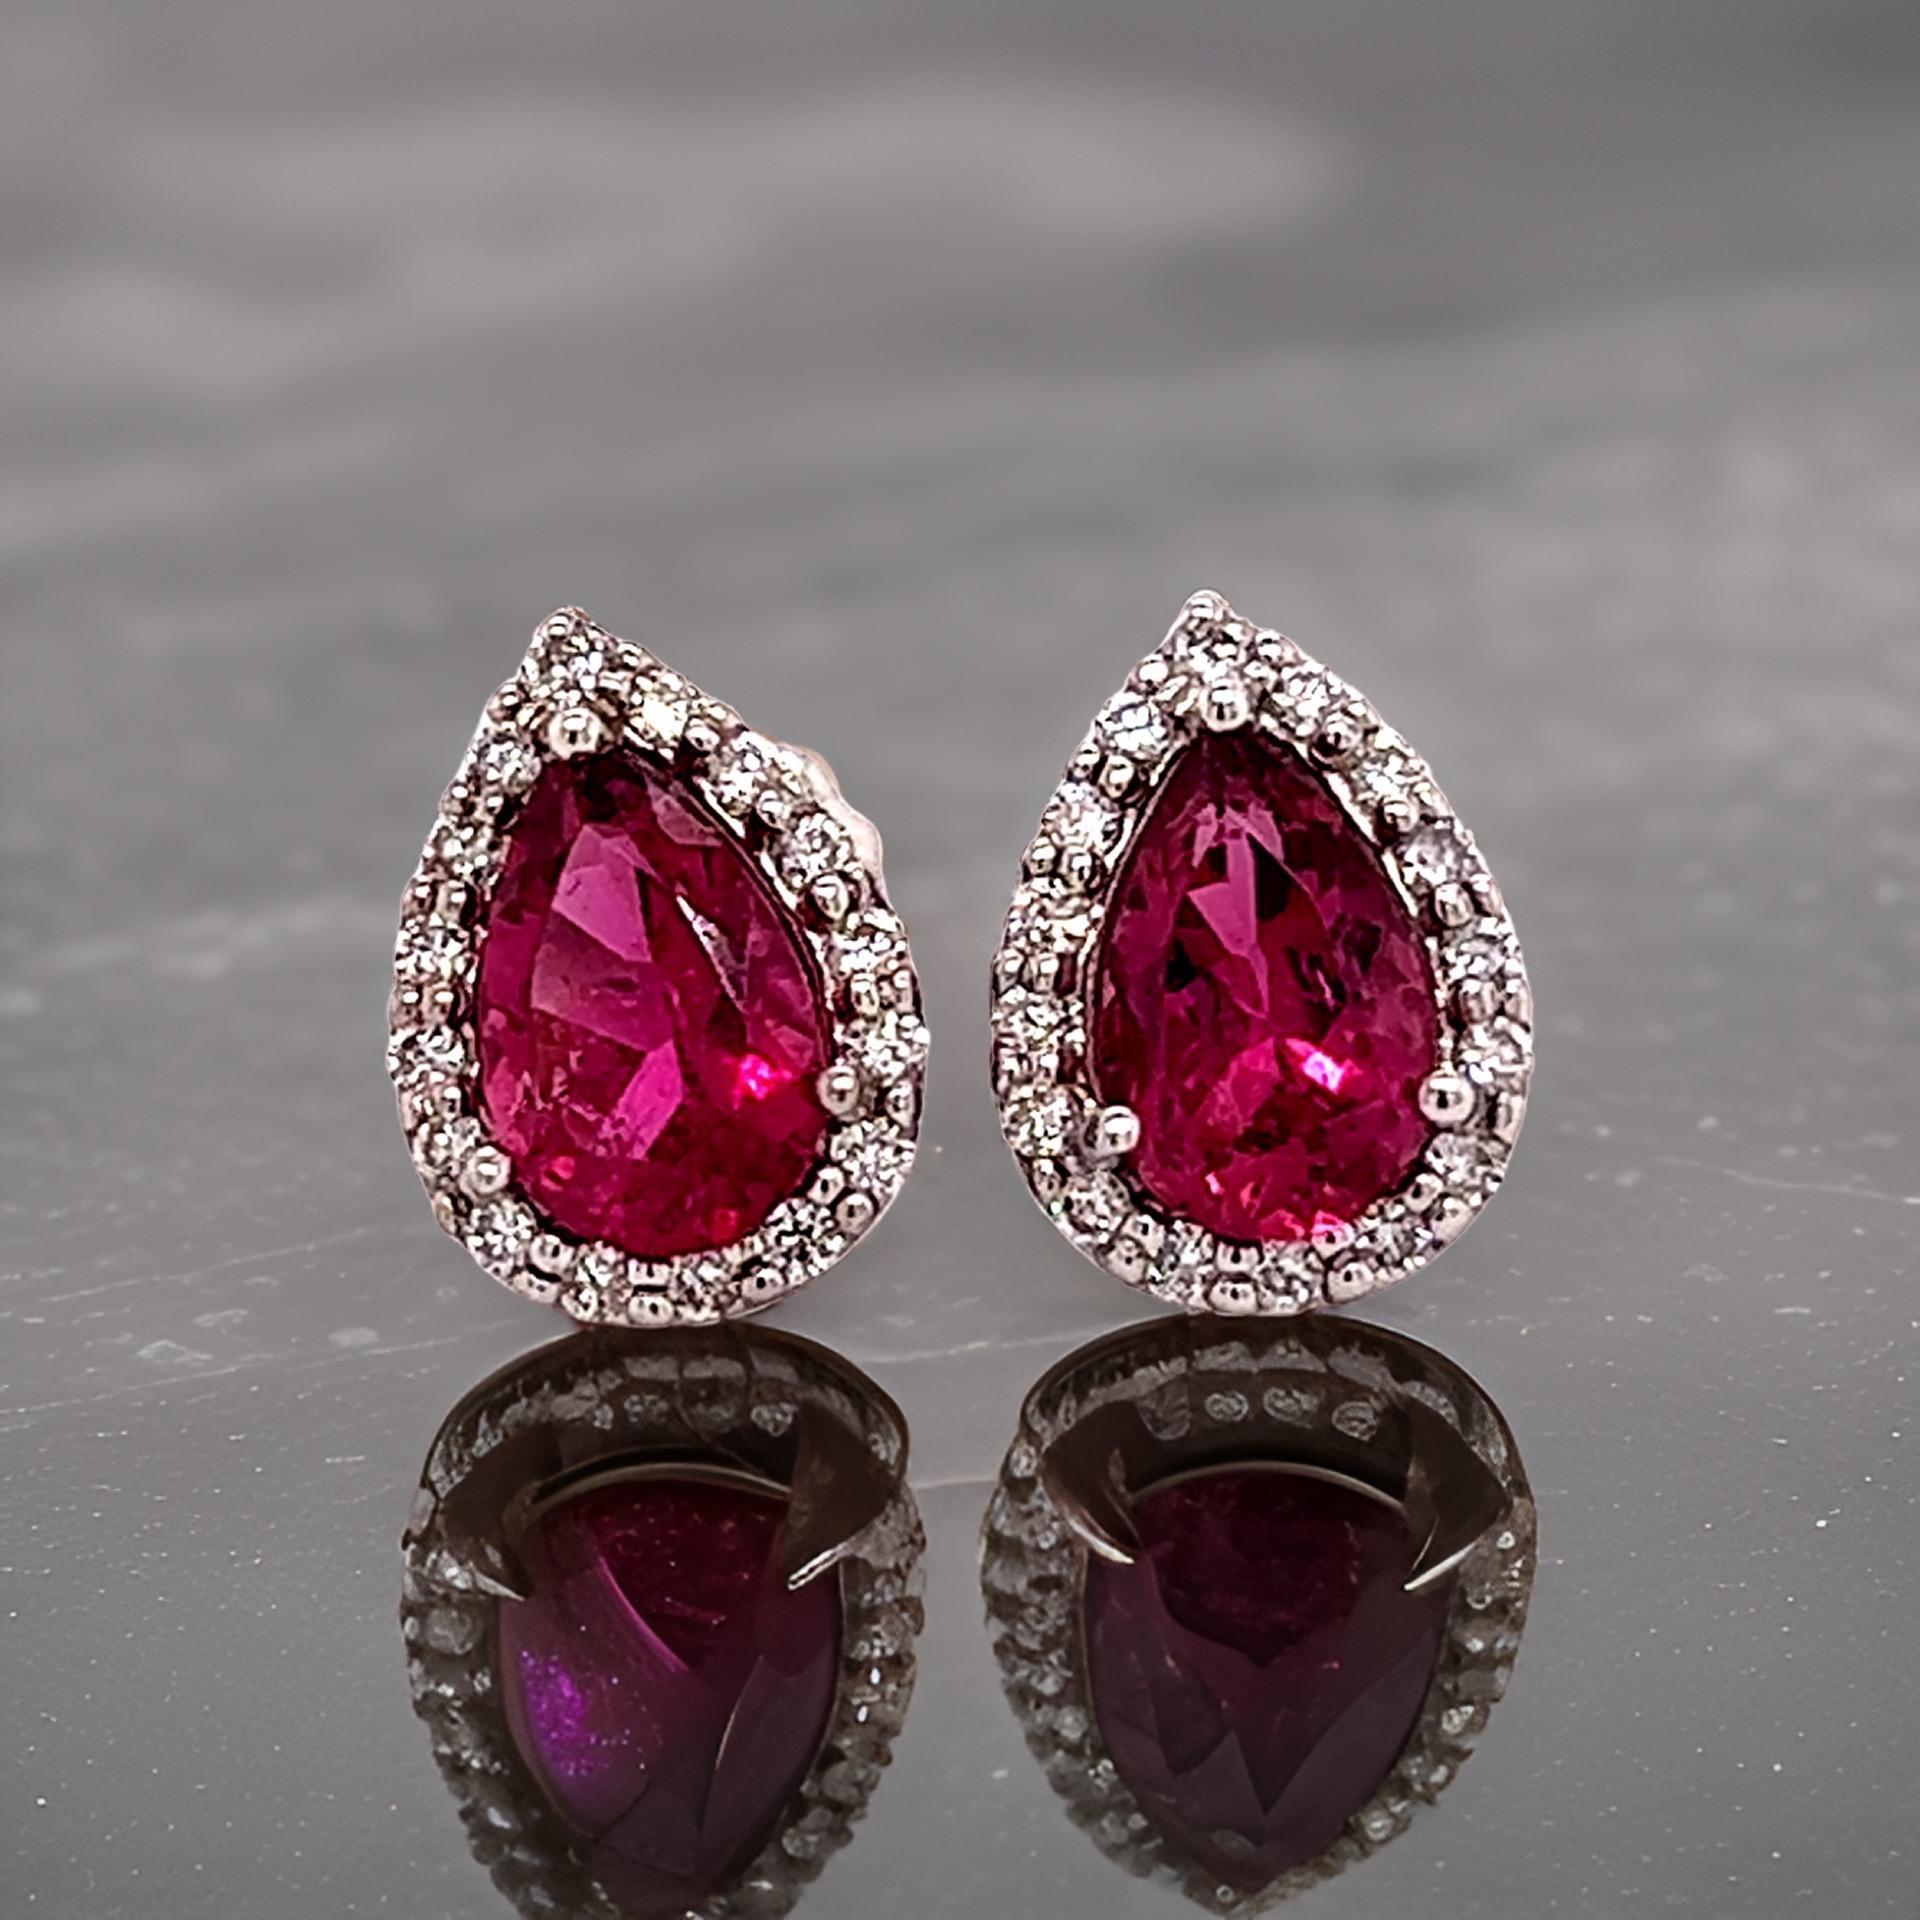 Natural Pink Tourmaline Diamond Stud Earrings 14k W Gold 2.02 TCW Certified For Sale 6